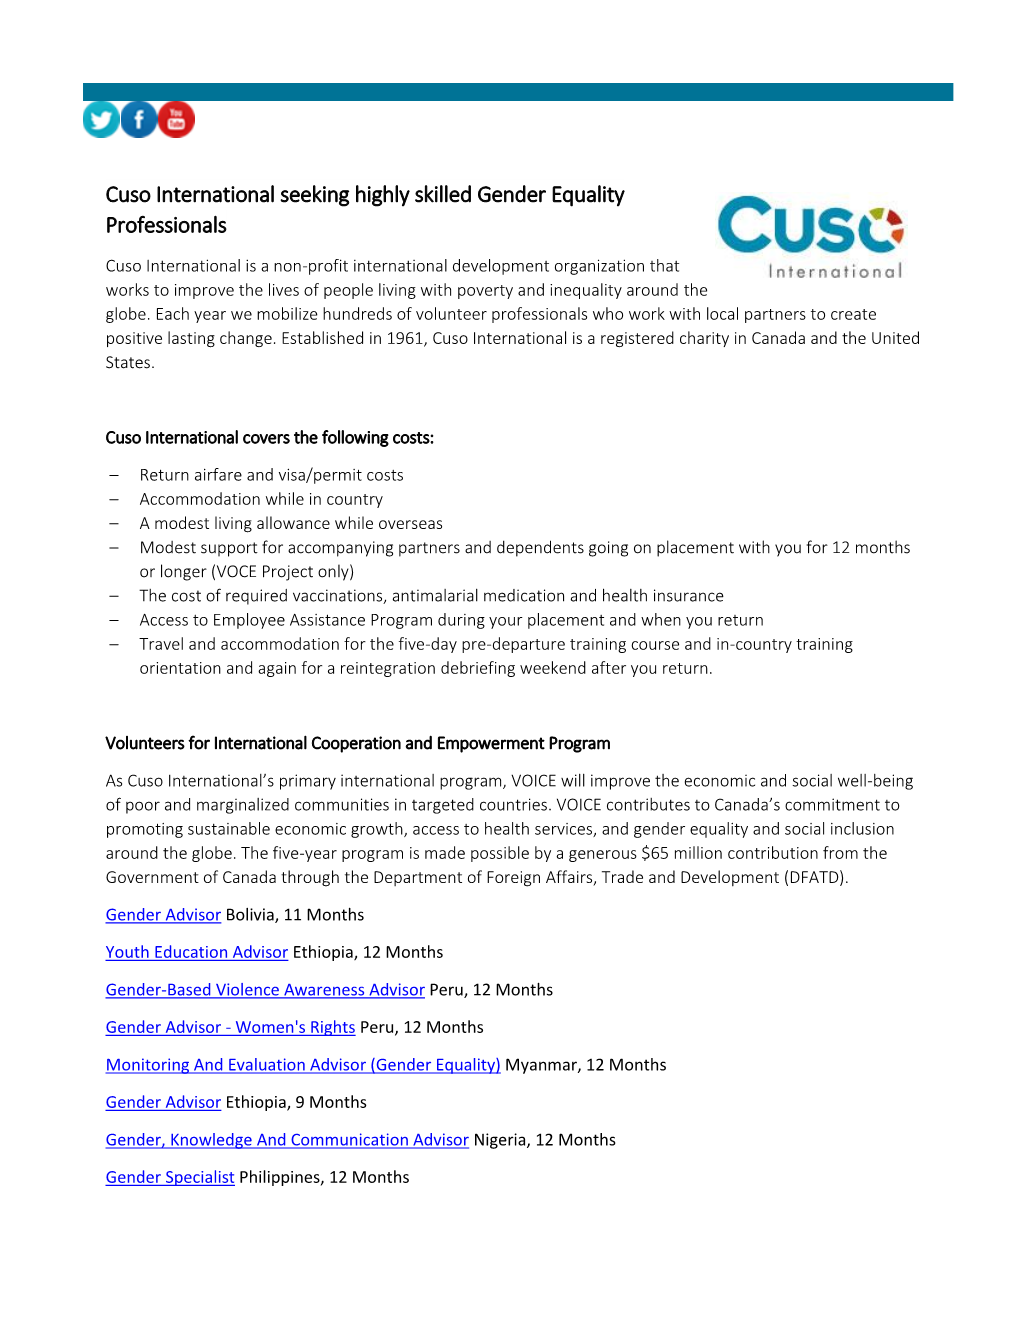 Cuso International Seeking Highly Skilled Gender Equality Professionals